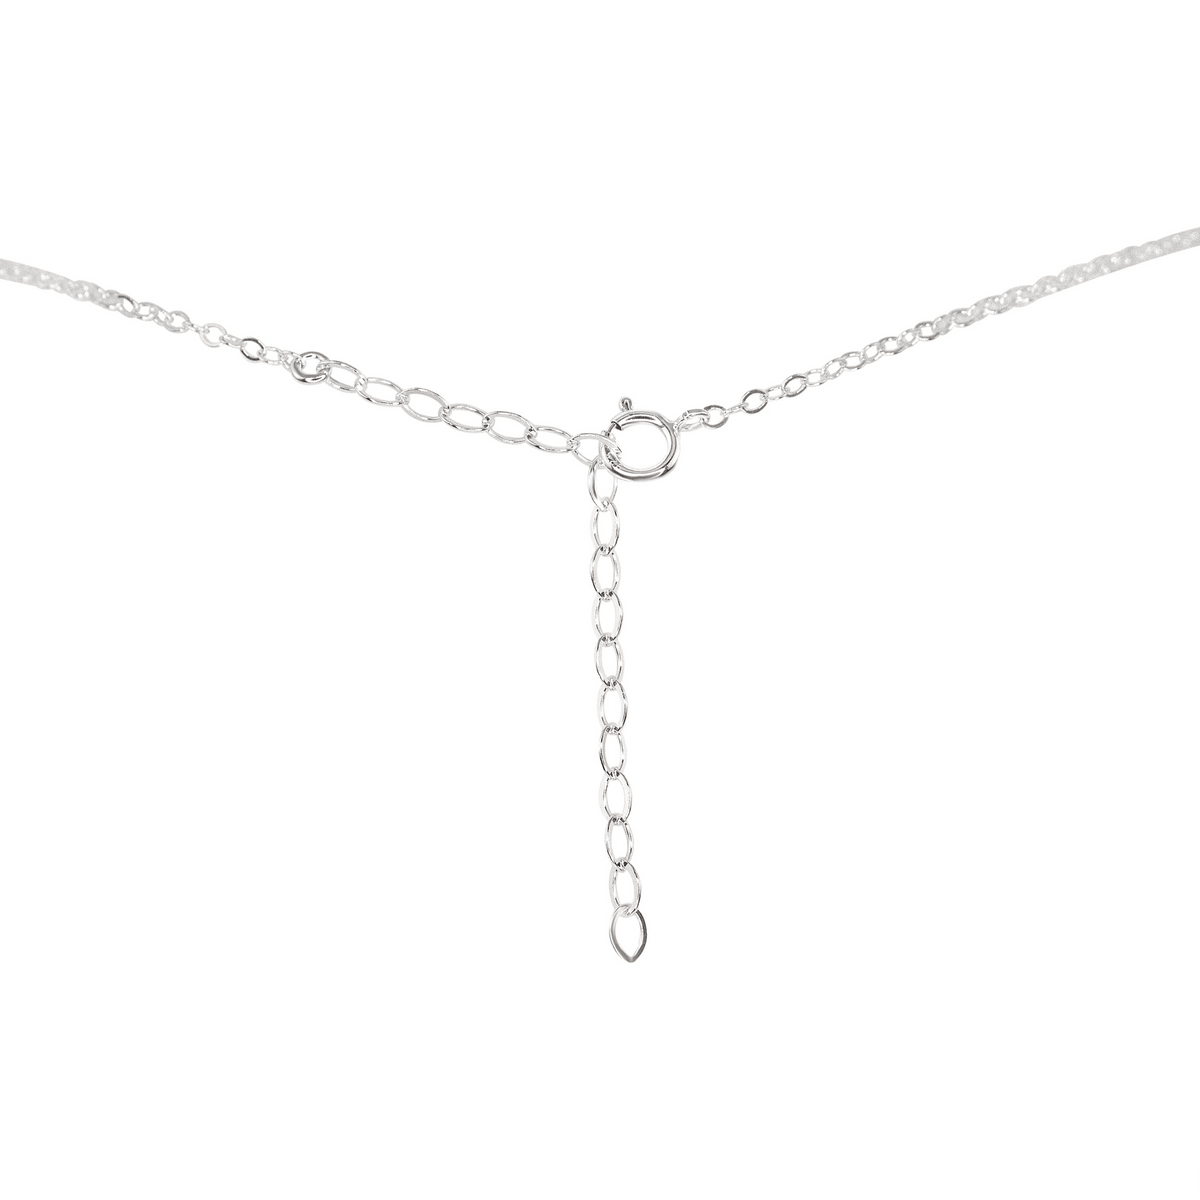 Prehnite Boho Lariat Necklace - Prehnite Boho Lariat Necklace - Sterling Silver - Luna Tide Handmade Crystal Jewellery